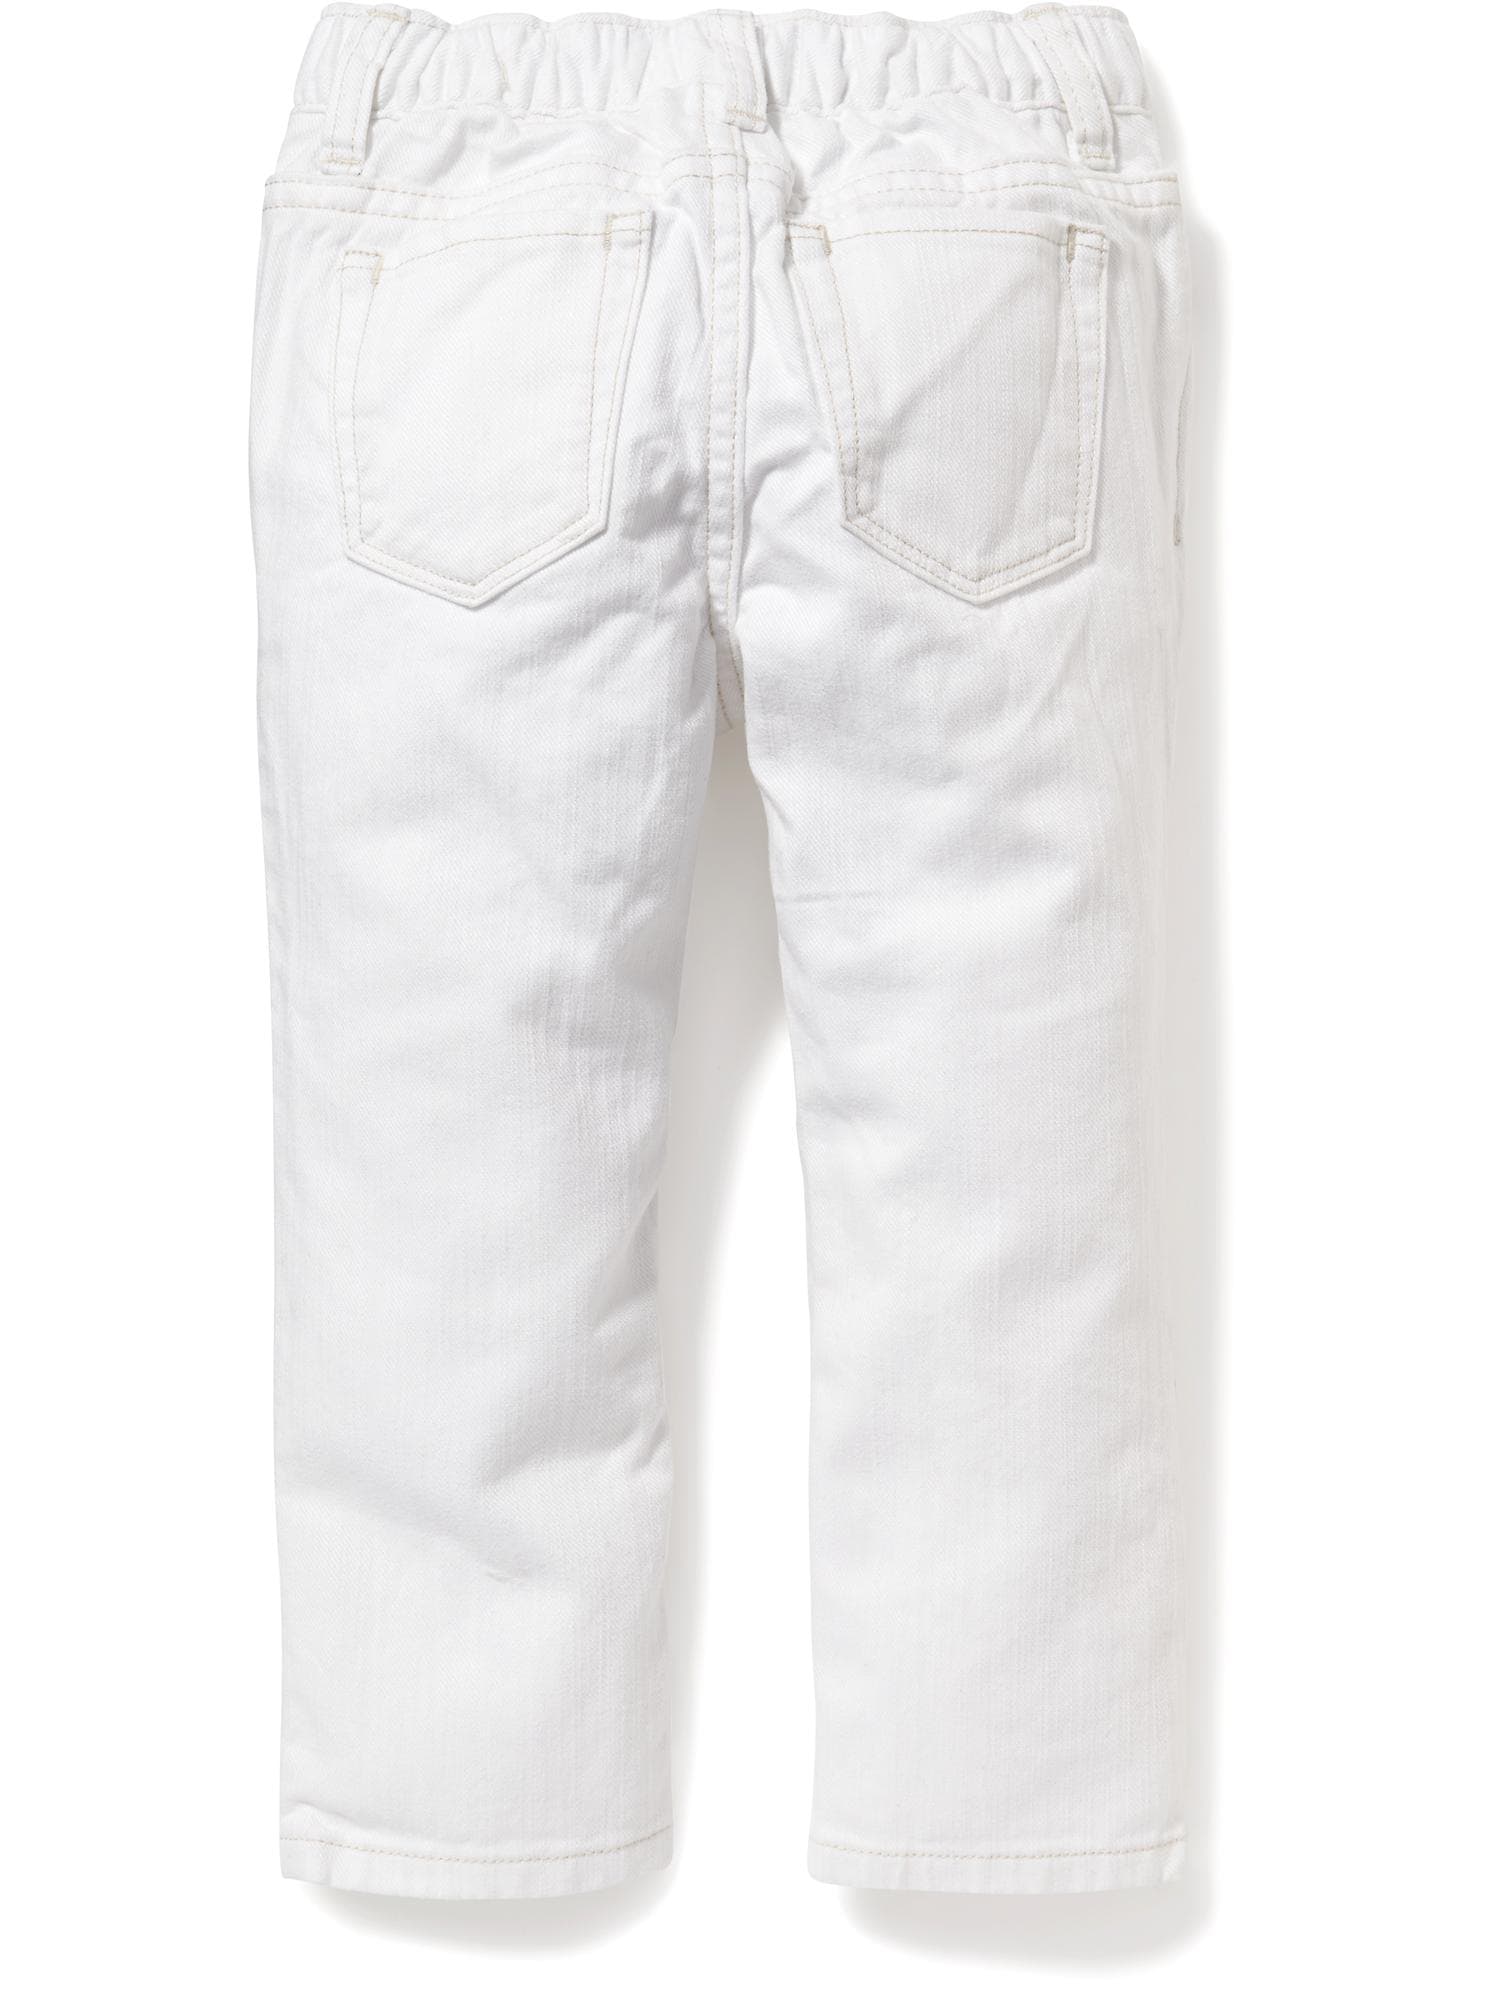 Skinny White Jeans for Toddler | Old Navy